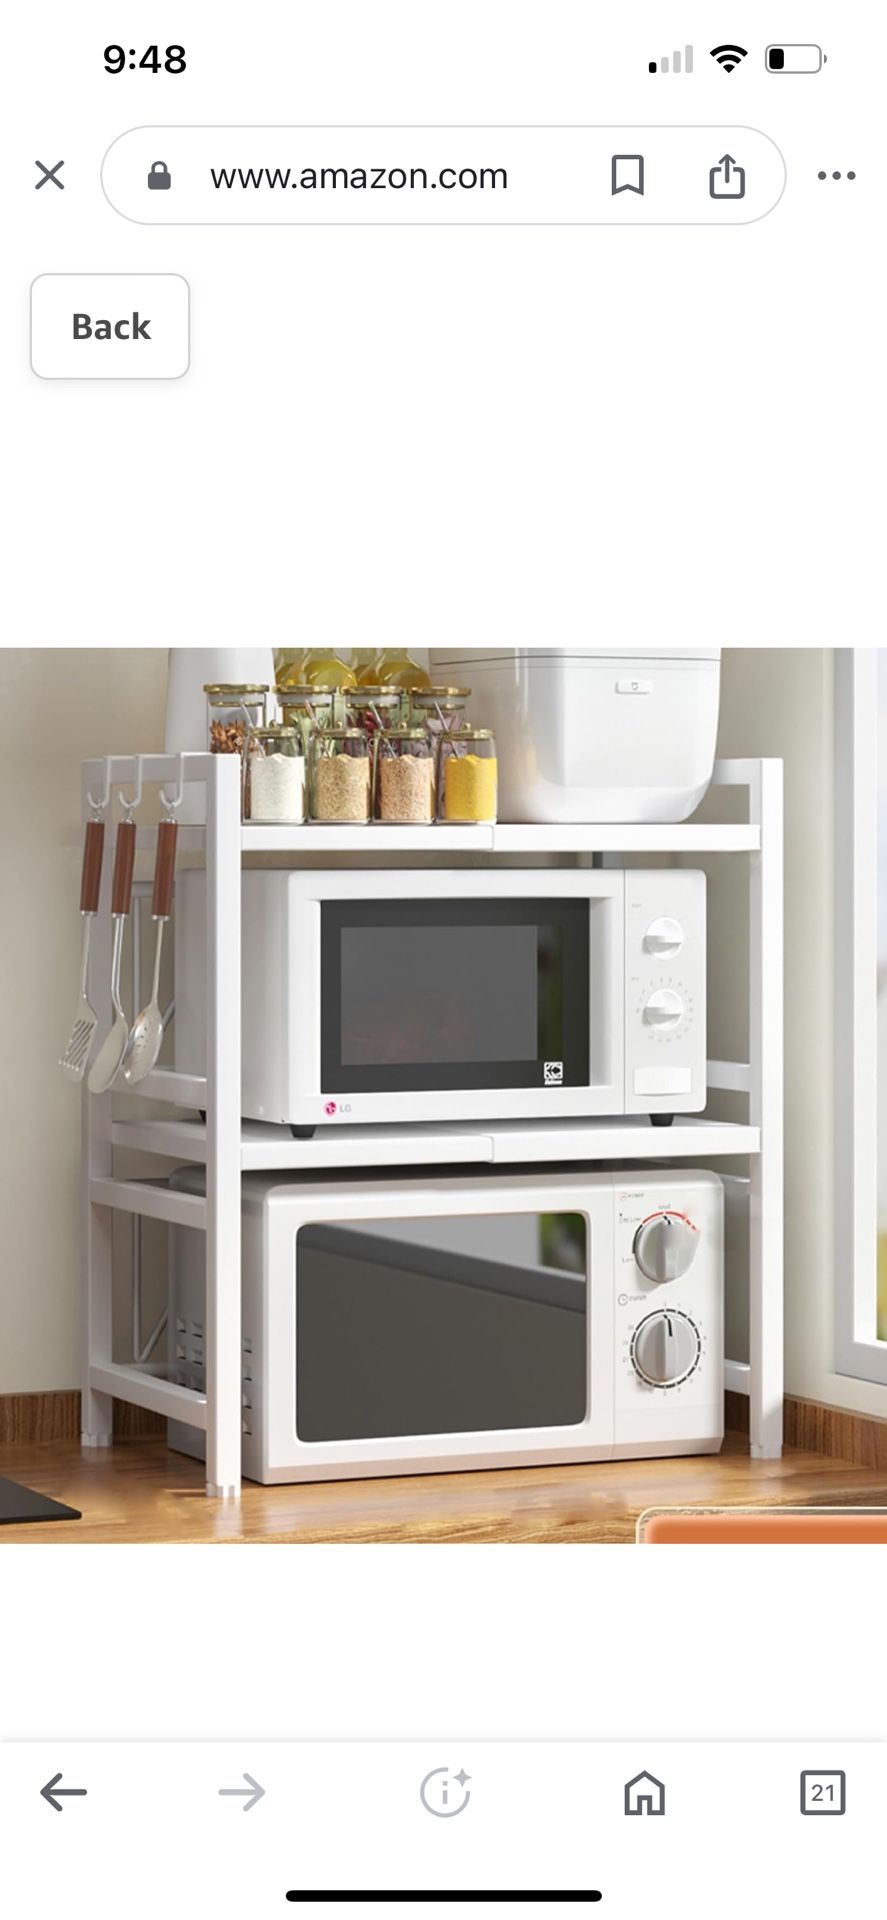 New Microwave Rack Adjustable Microwave Rack Microwave Oven Shelf with Fixing Kit Modern Kitchen Decor Kitchen Storage Rack